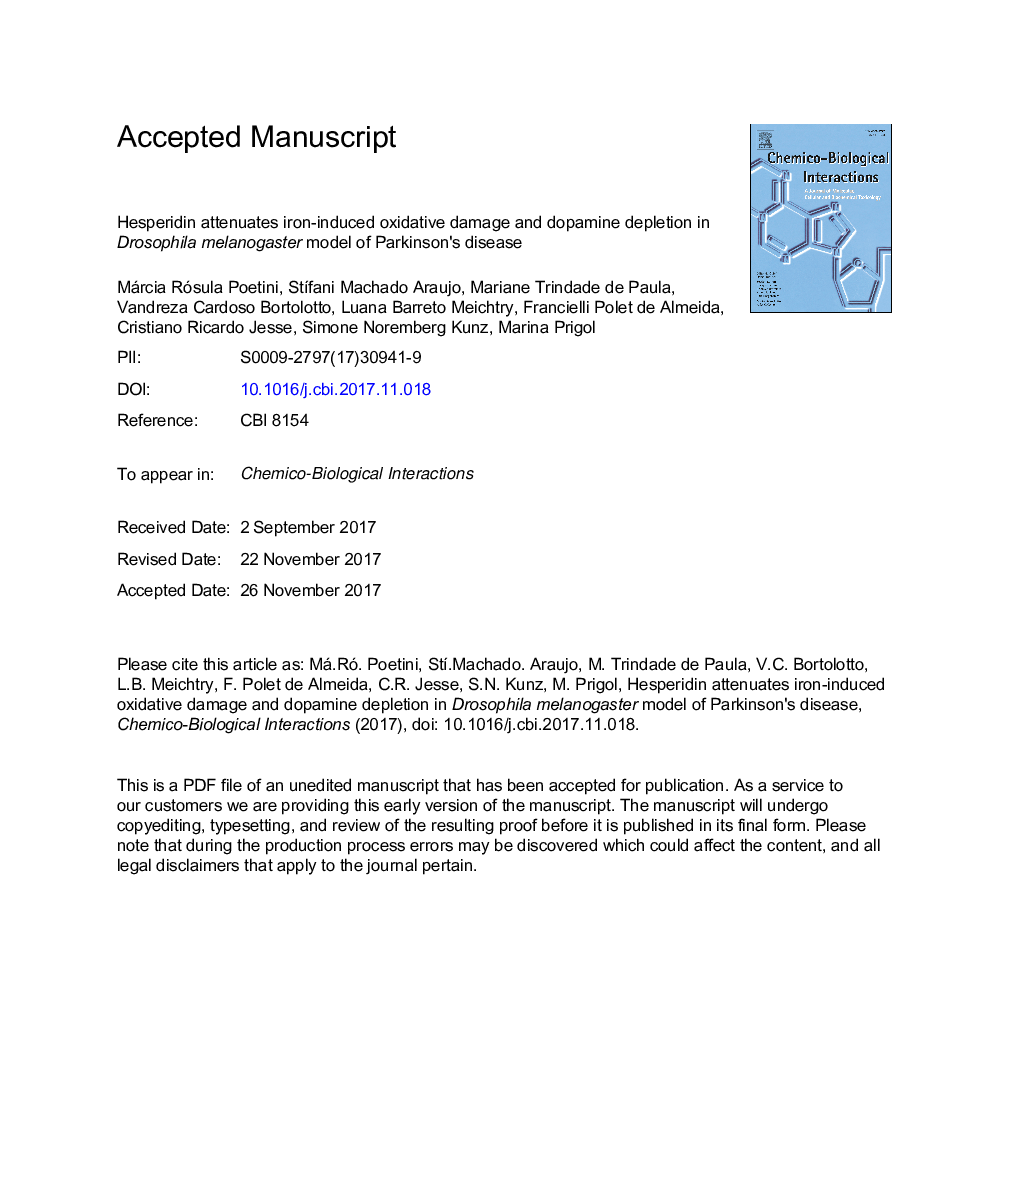 Hesperidin attenuates iron-induced oxidative damage and dopamine depletion in Drosophila melanogaster model of Parkinson's disease